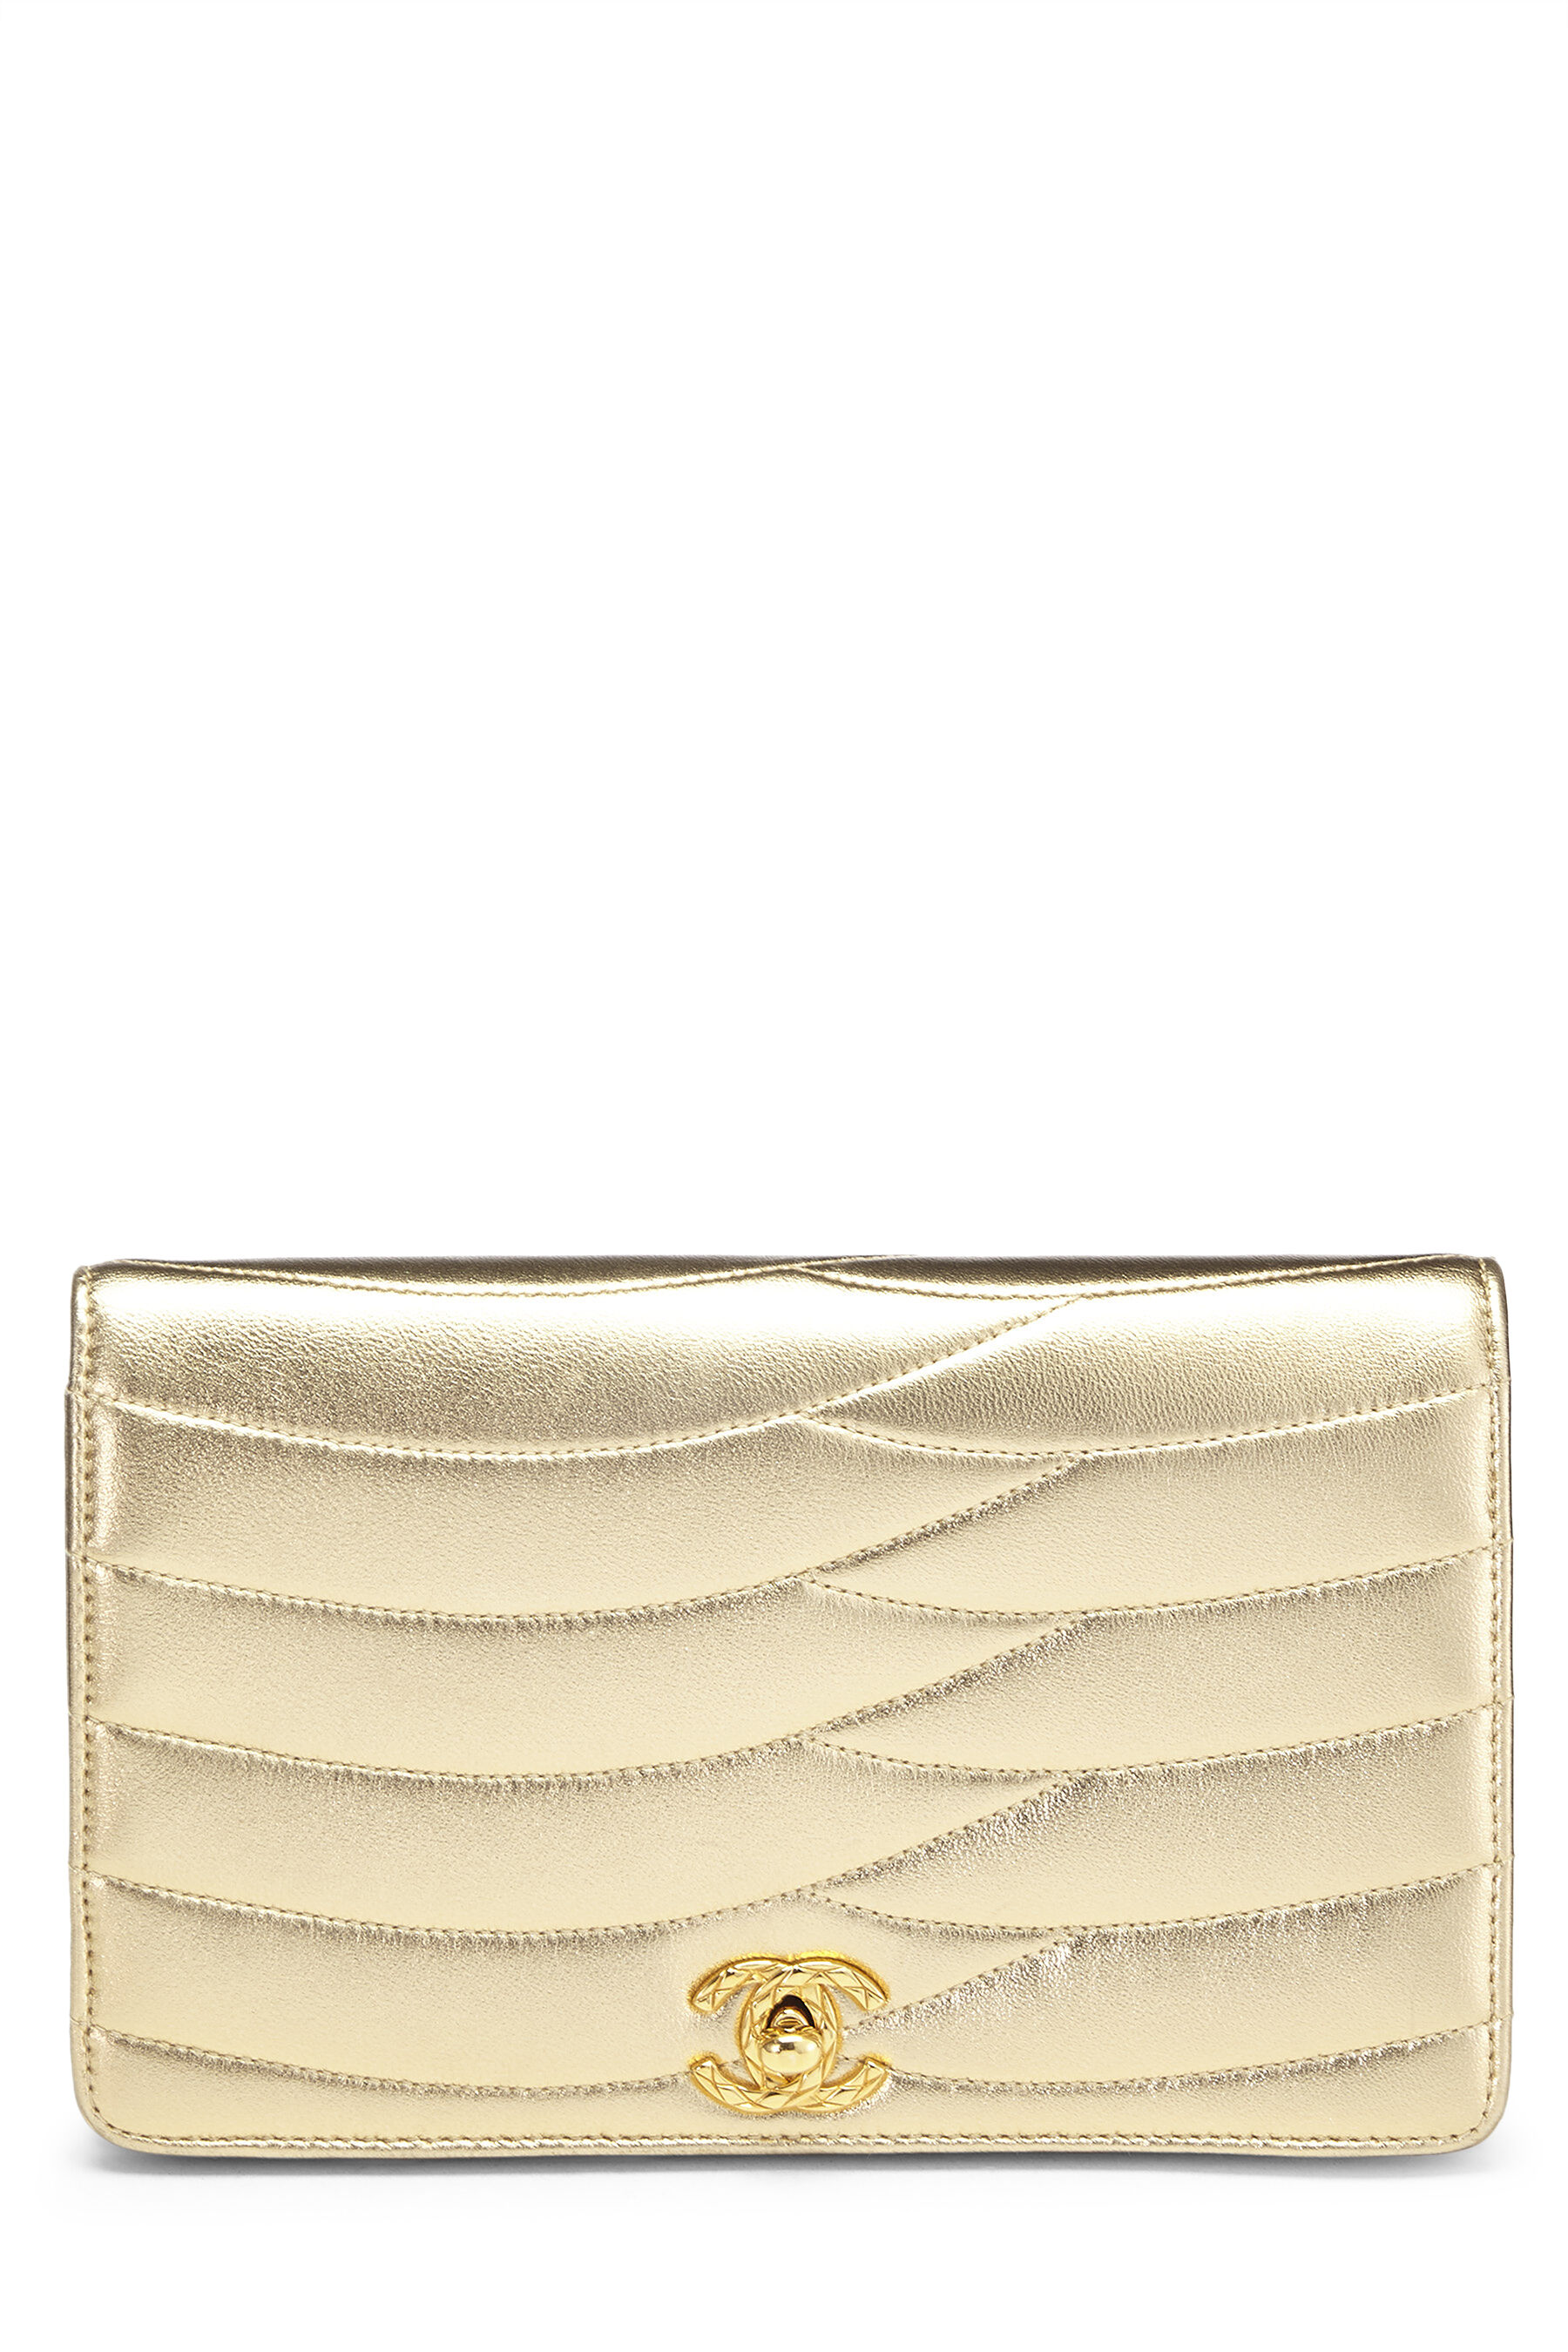 Chanel Gold Quilted Lambskin Clutch Q6B04N1IDB004